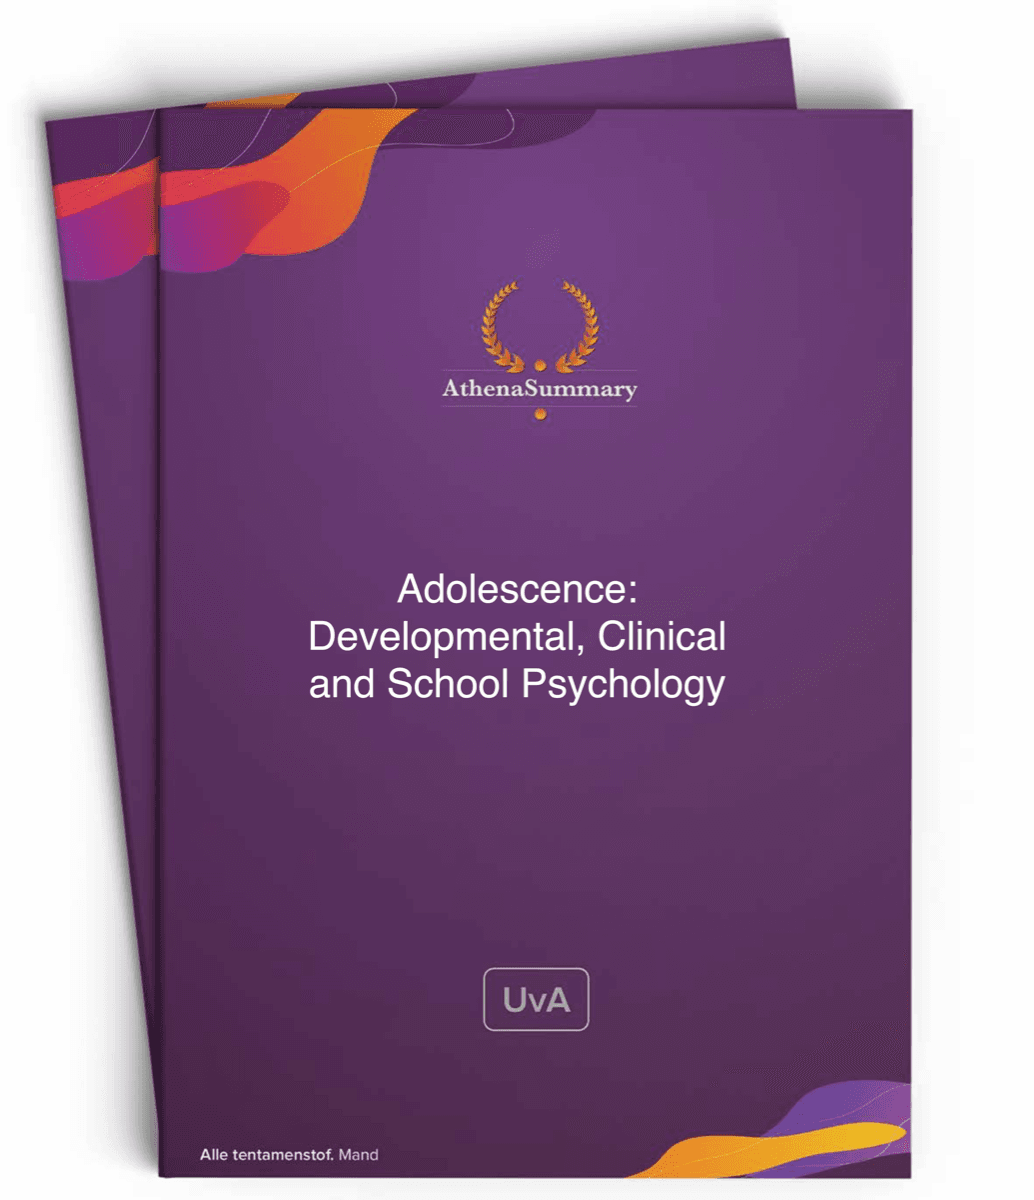 Literature Summary: Adolescence: Developmental, Clinical and School Psychology